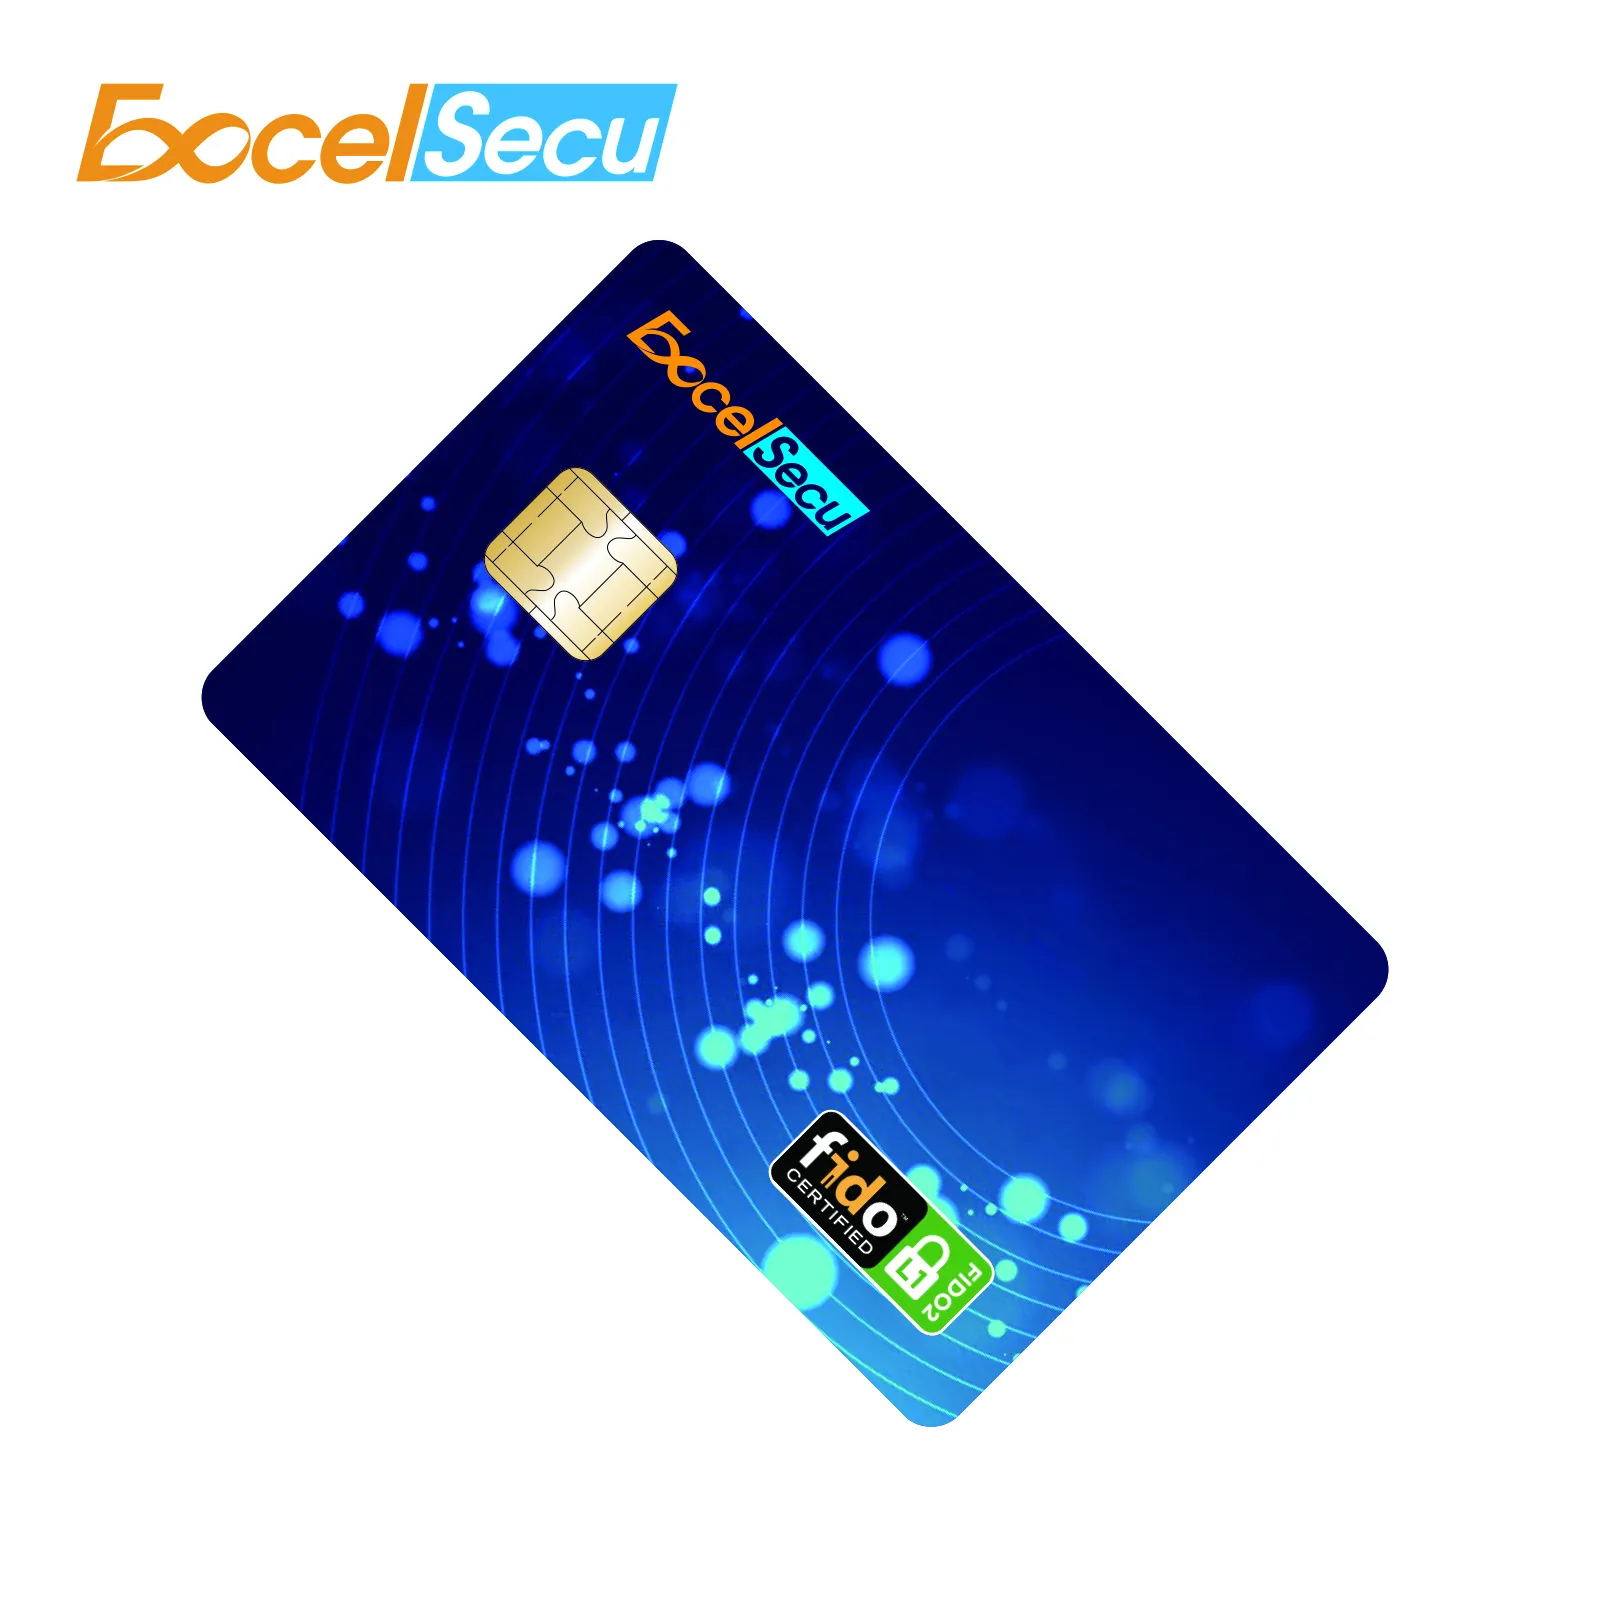 eSecu JAVA platform card for fido2 security key